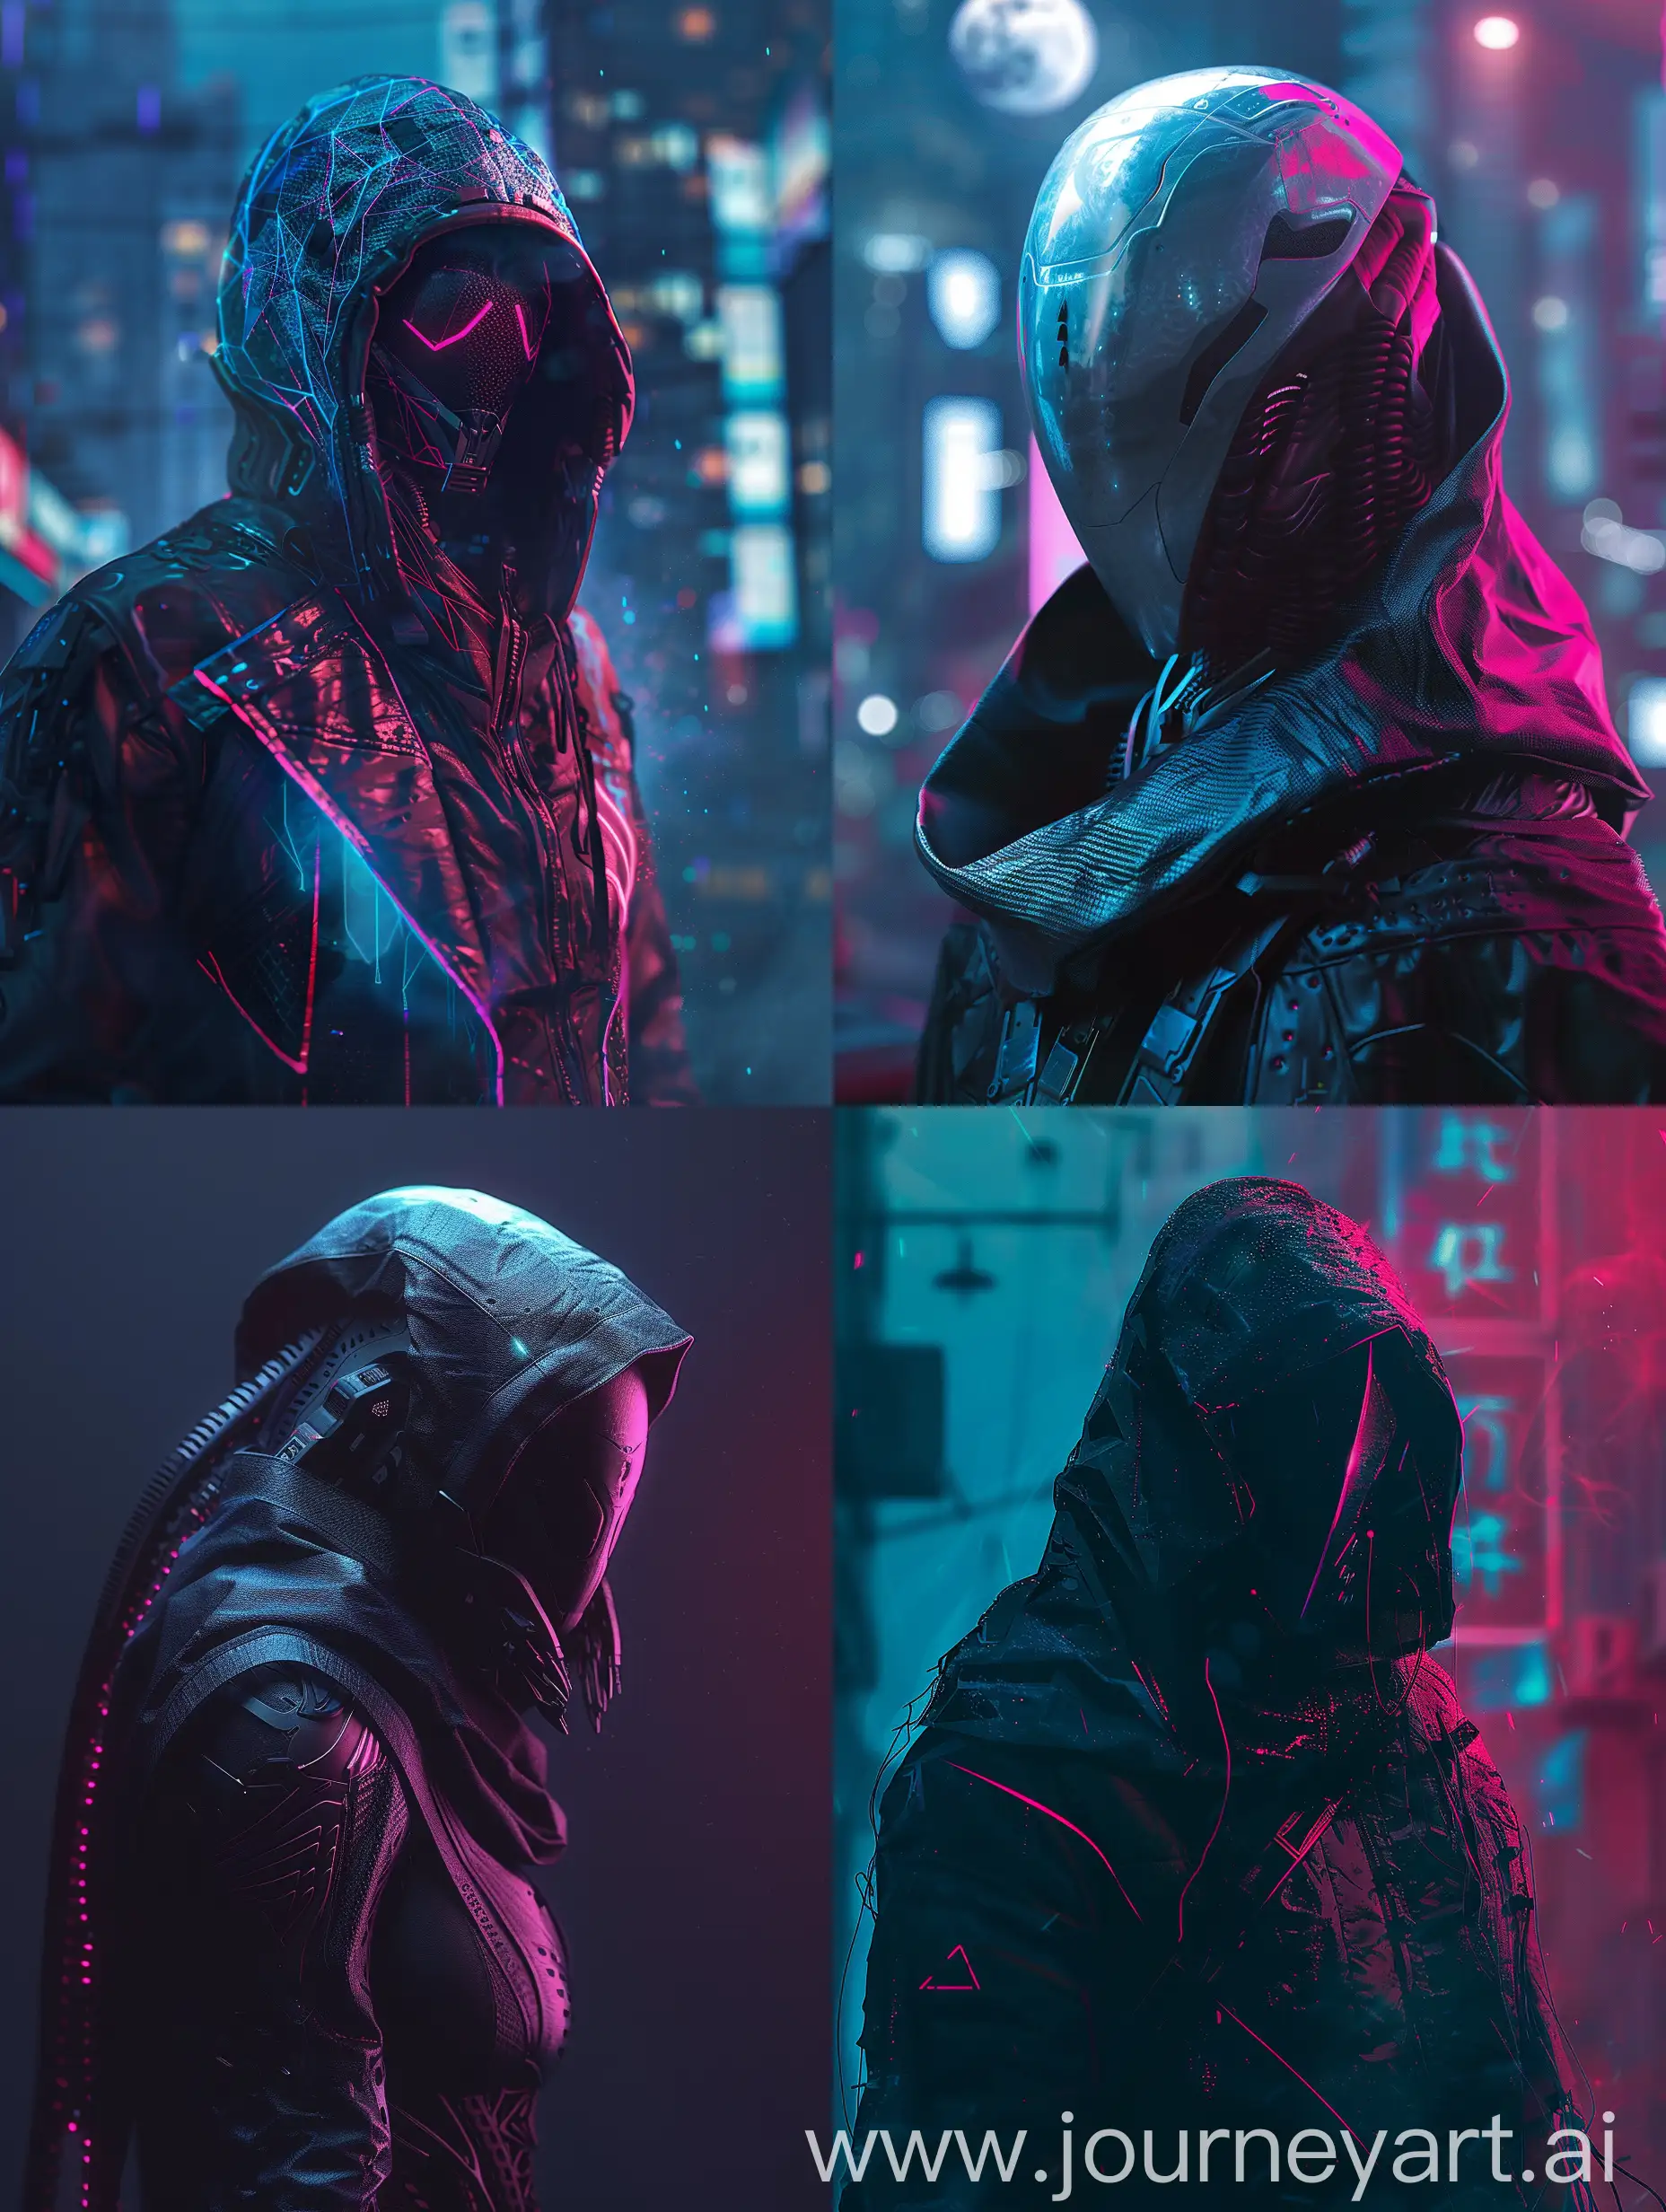 Shadowy-Assassin-in-Cyberpunk-Cityscape